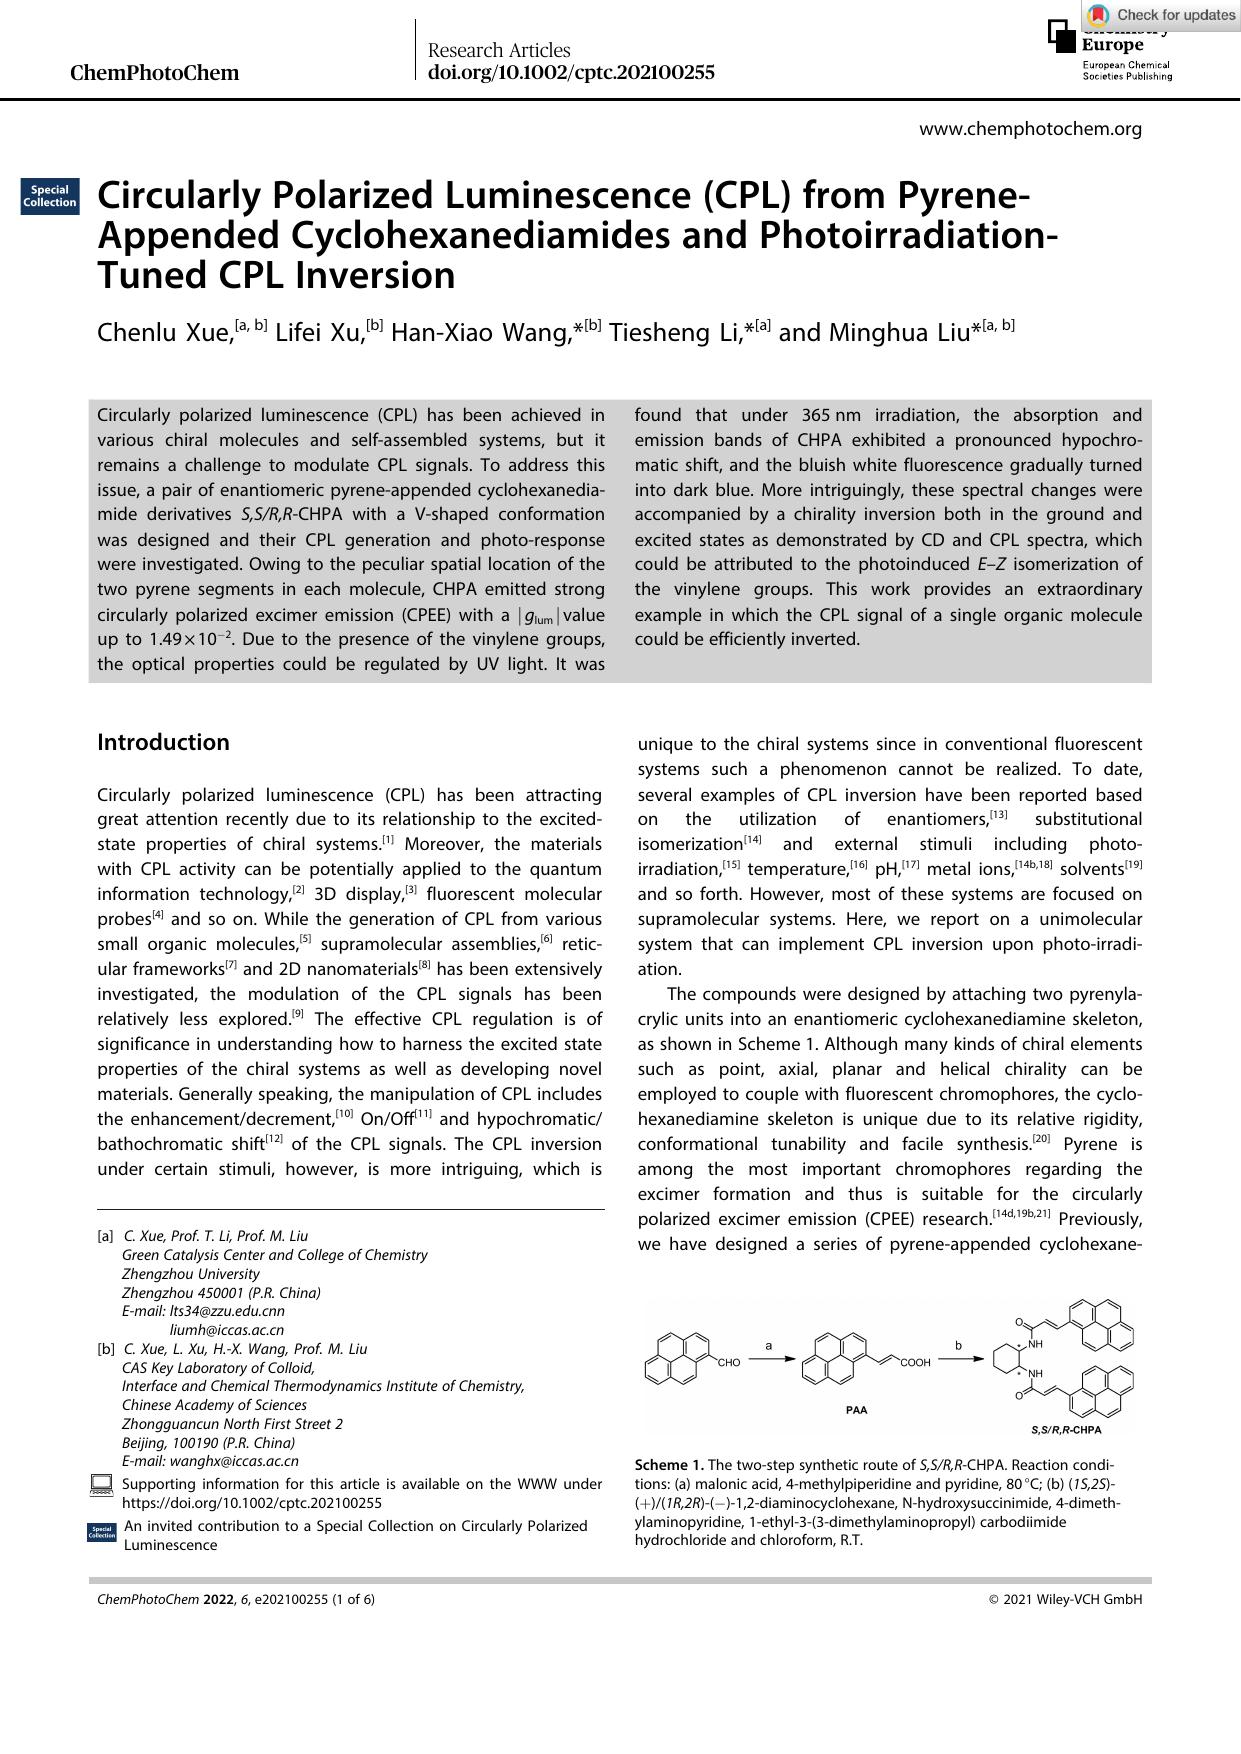 Circularly Polarized Luminescence (CPL) from PyreneâAppended Cyclohexanediamides and PhotoirradiationâTuned CPL Inversion by Unknown